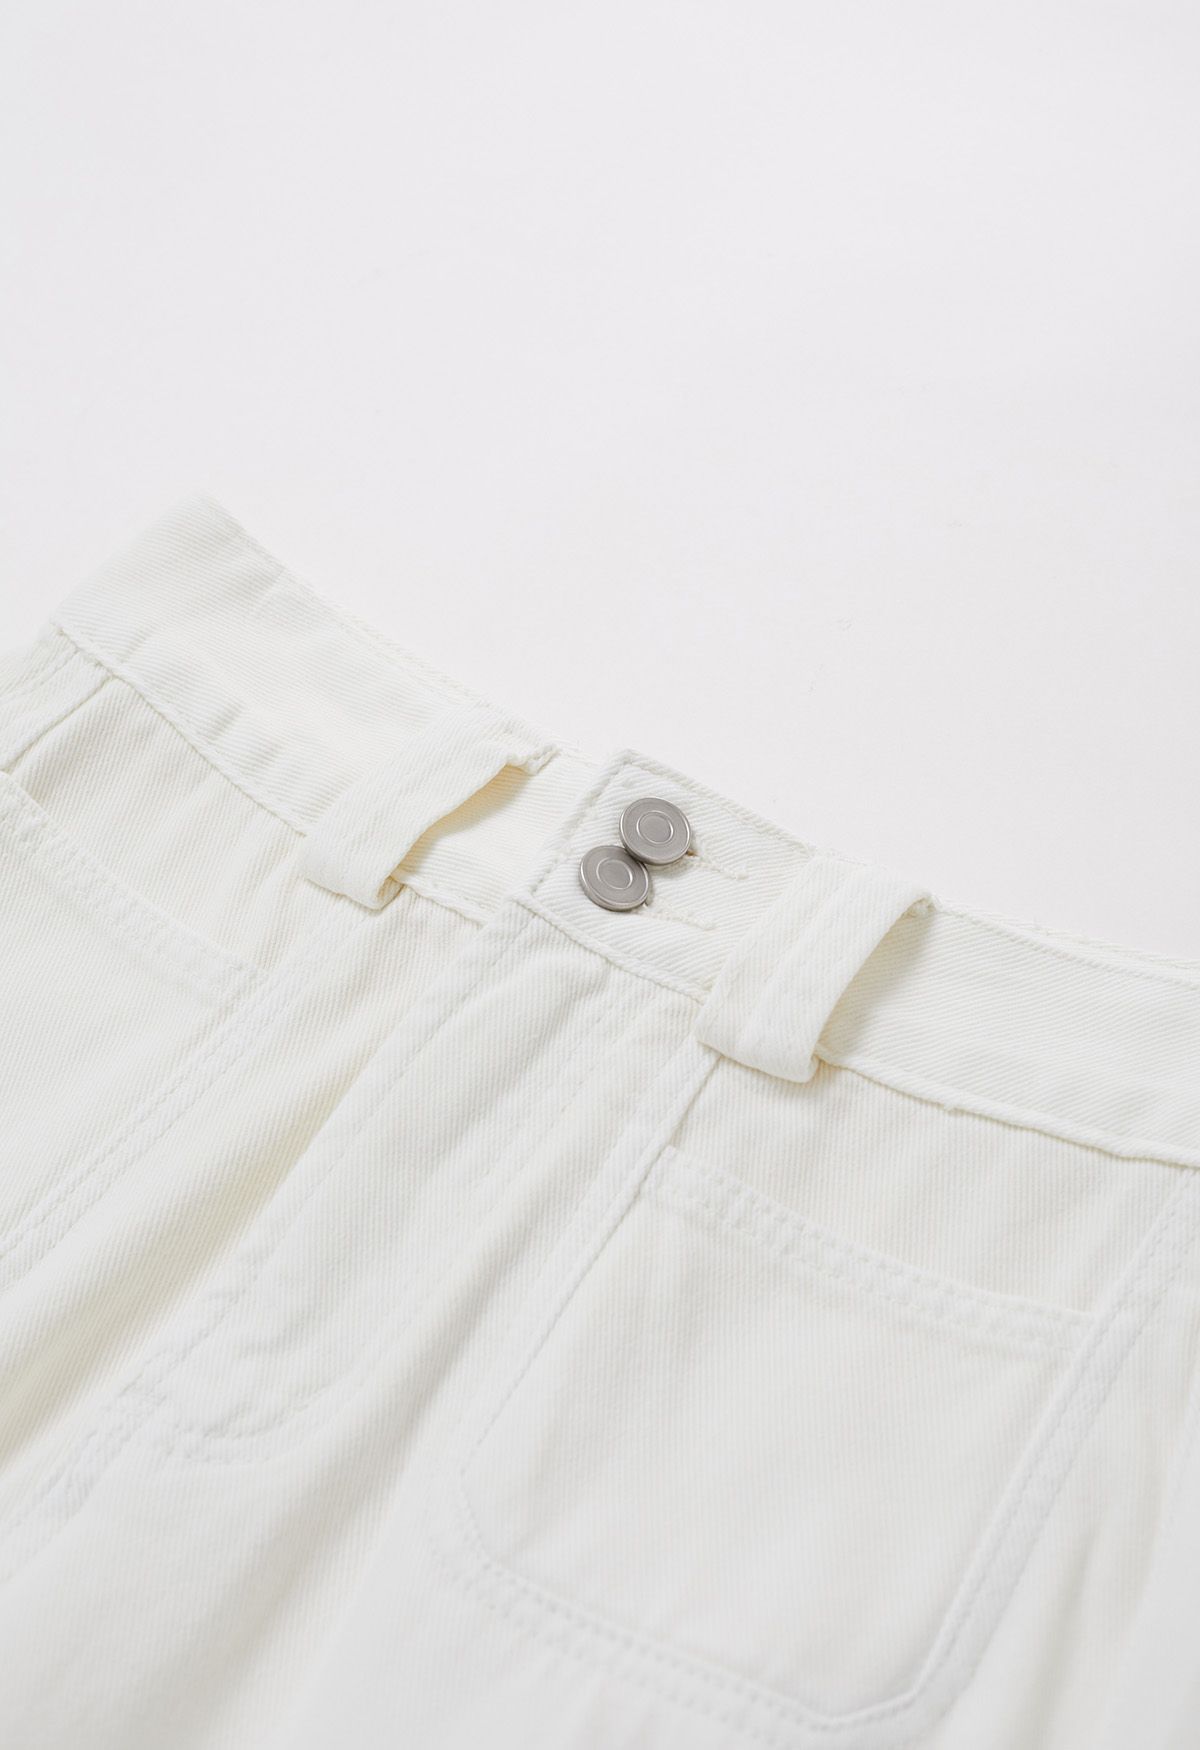 Vintage Charm Straight Leg Jeans in White